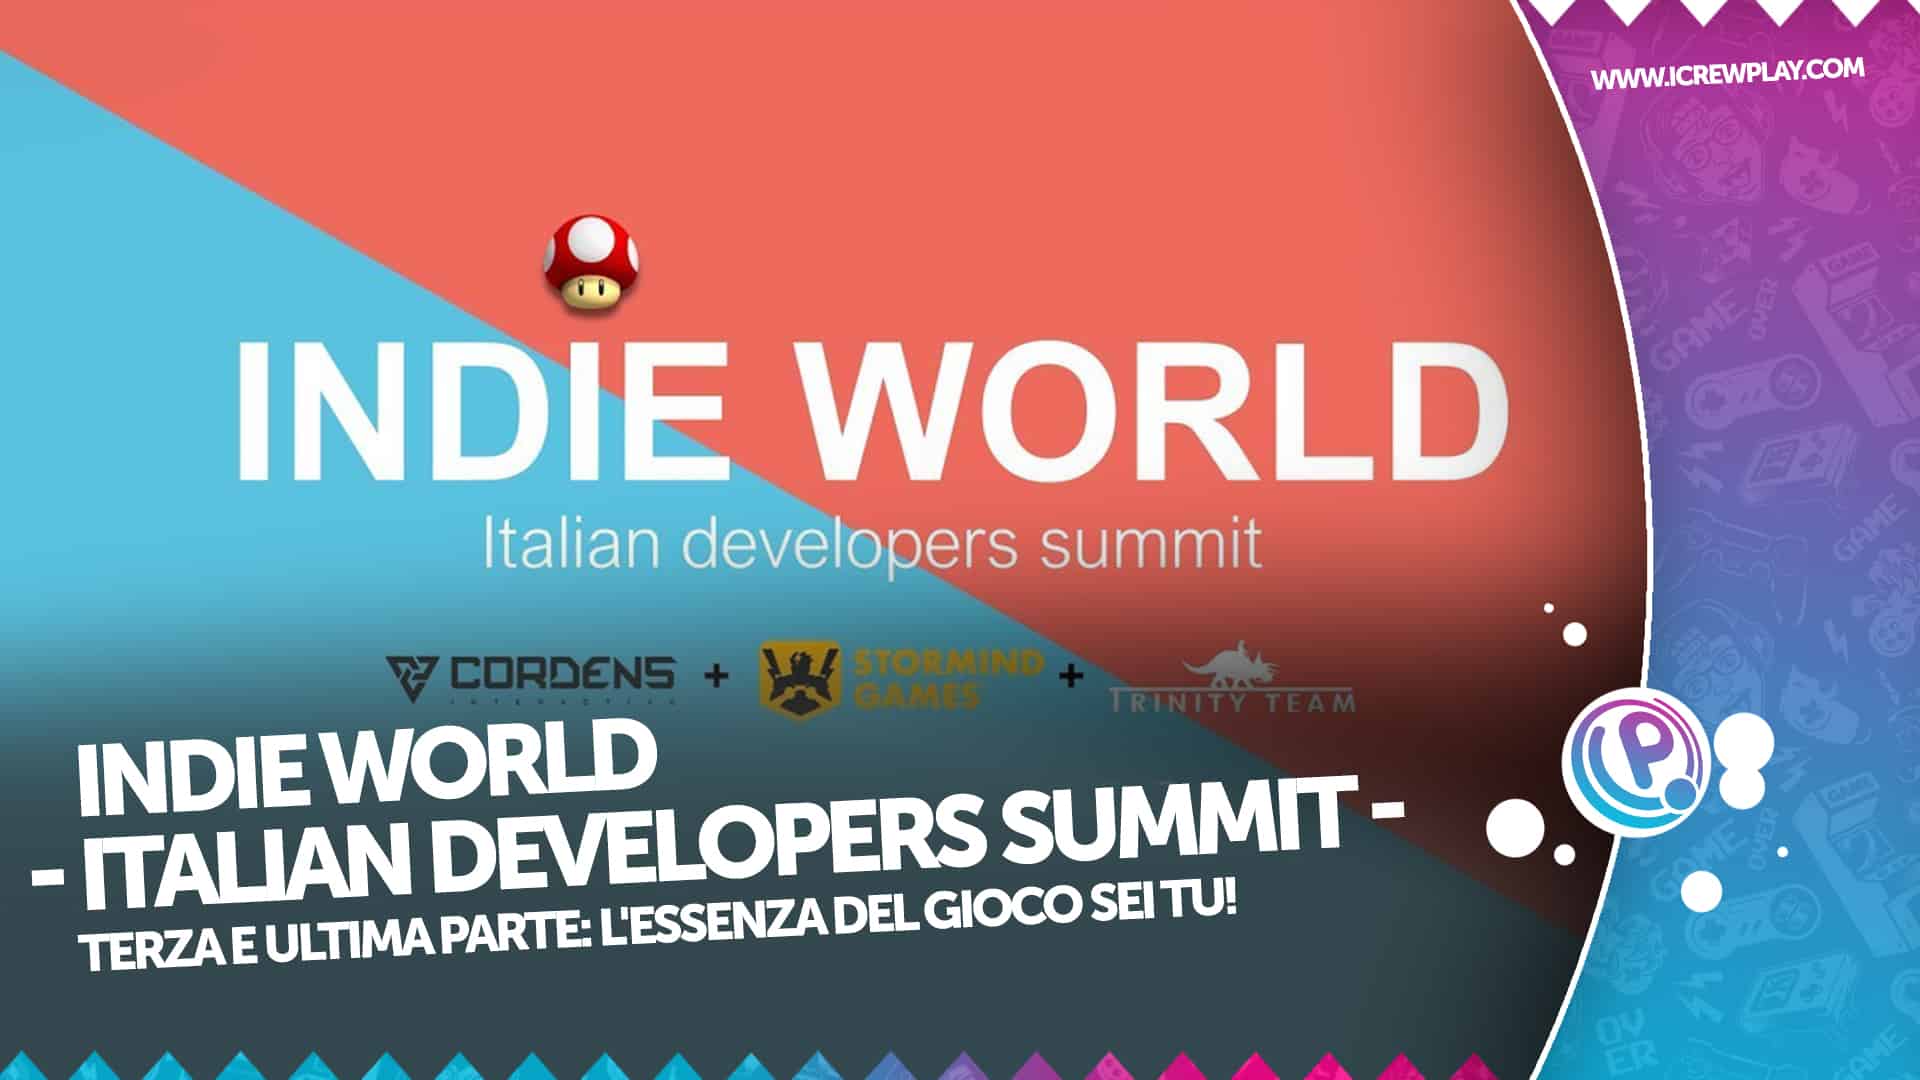 INDIE WORLD - Italian Developers Summit - Terza e ultima parte 2